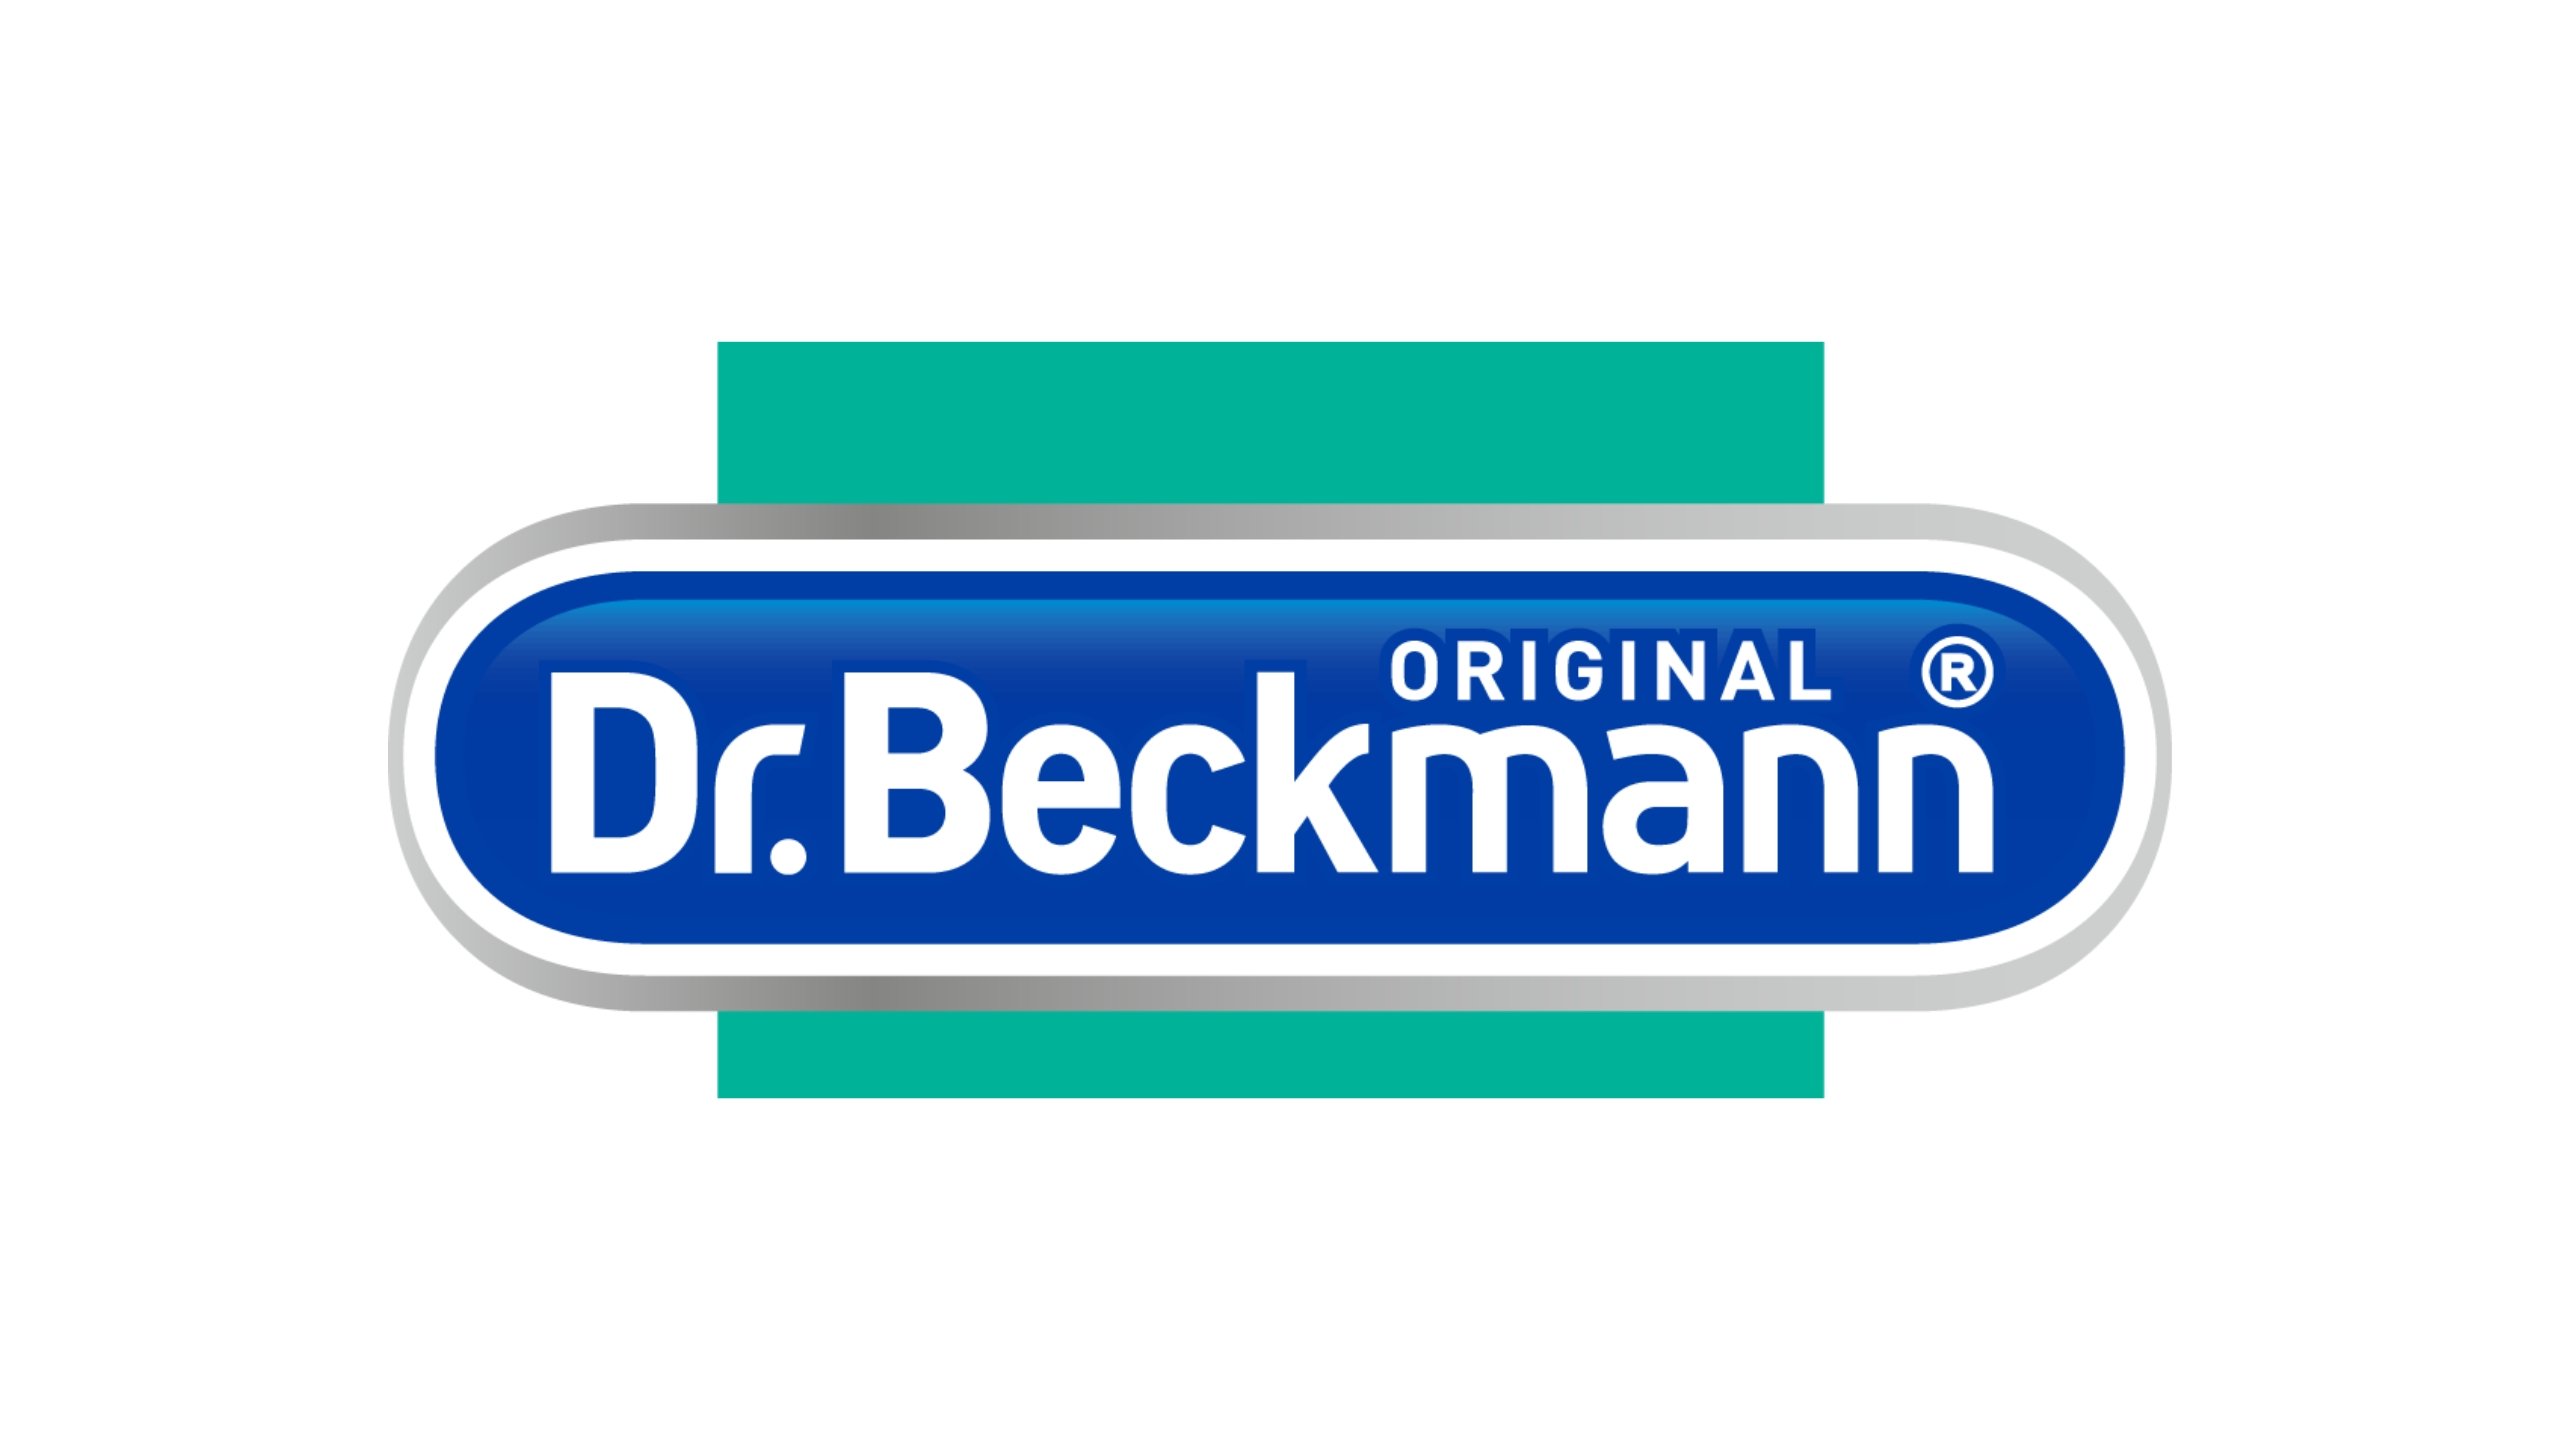 Dr. Beckmann Brosse Détachante Tissus d'Ameublement